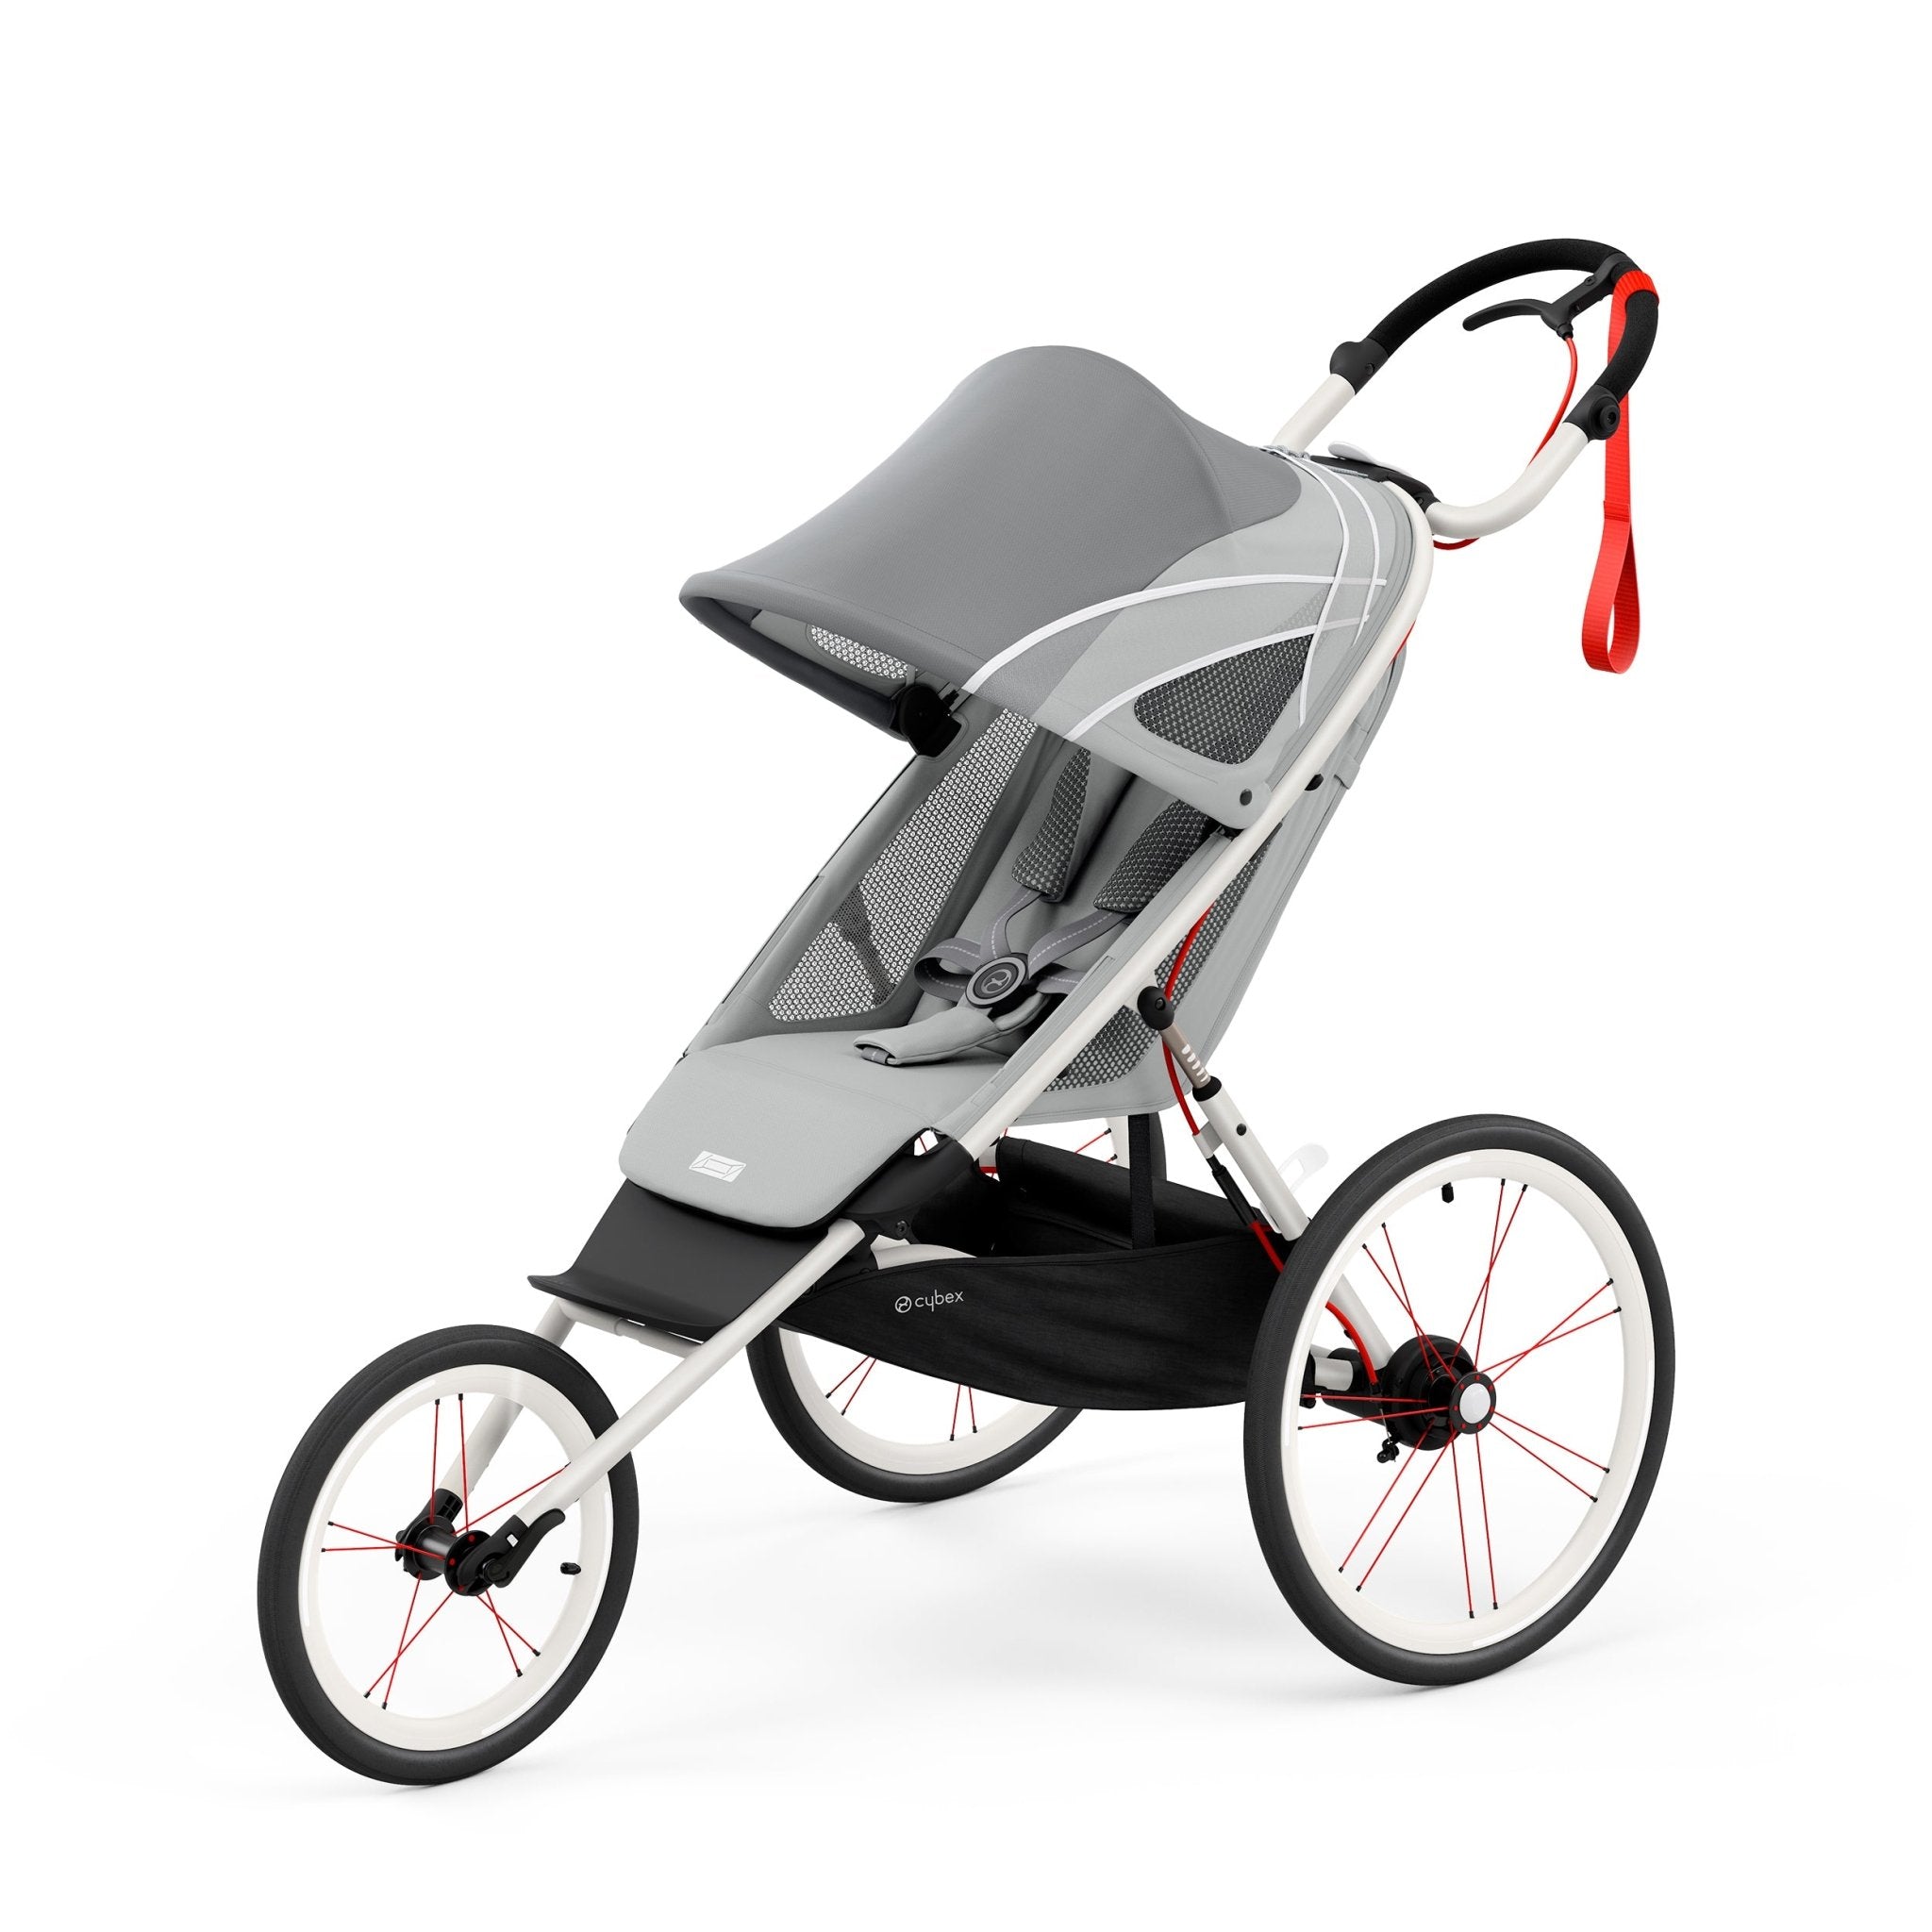 Cybex AVI Jogging Stroller Bundle, Black Frame + Maliblue Seat Pack - ANB Baby -4063846218431$300 - $500